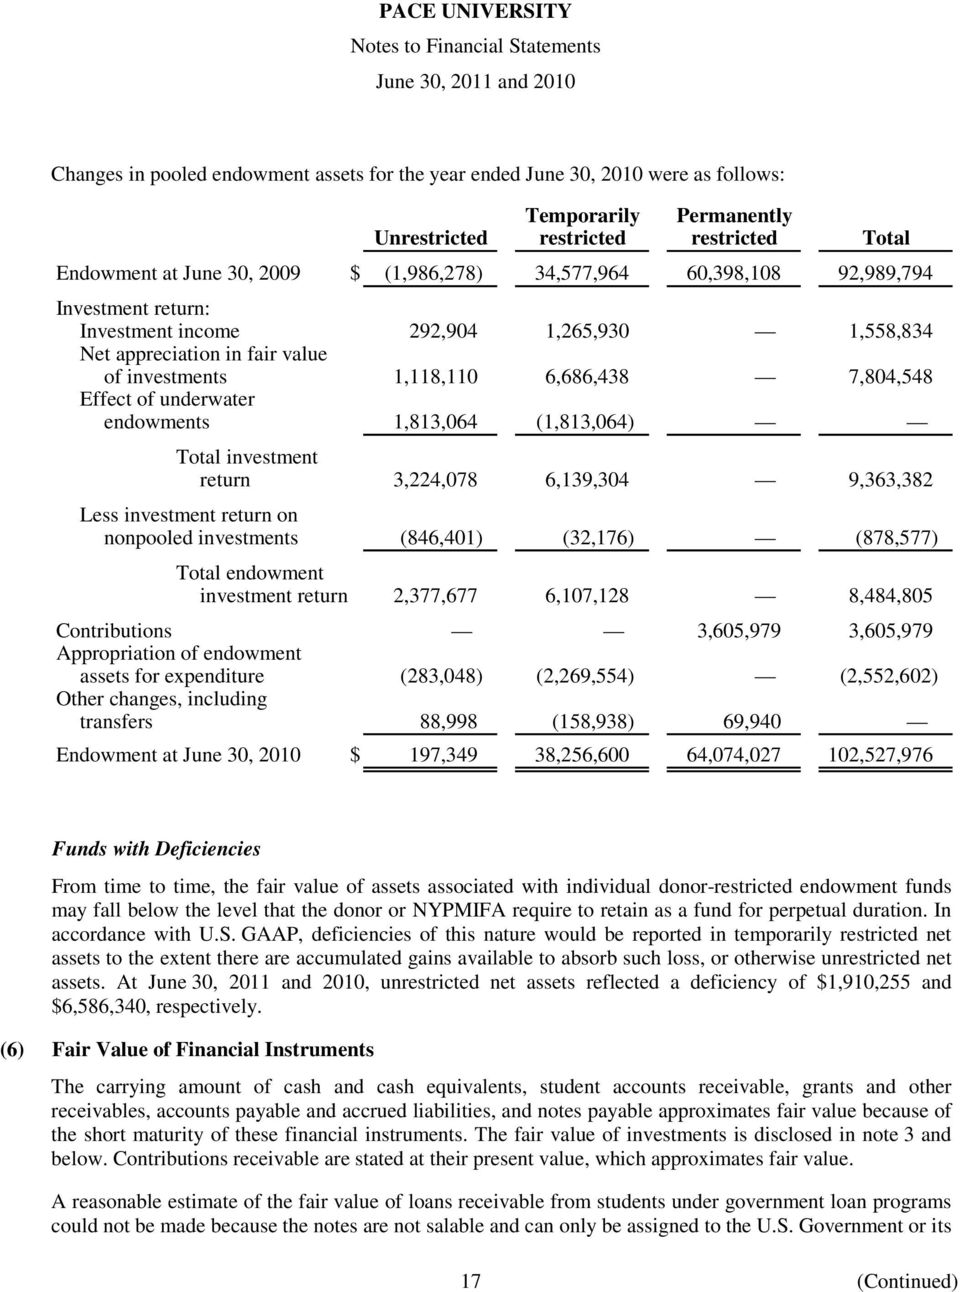 endowments 1,813,064 (1,813,064) Total investment return 3,224,078 6,139,304 9,363,382 Less investment return on nonpooled investments (846,401) (32,176) (878,577) Total endowment investment return